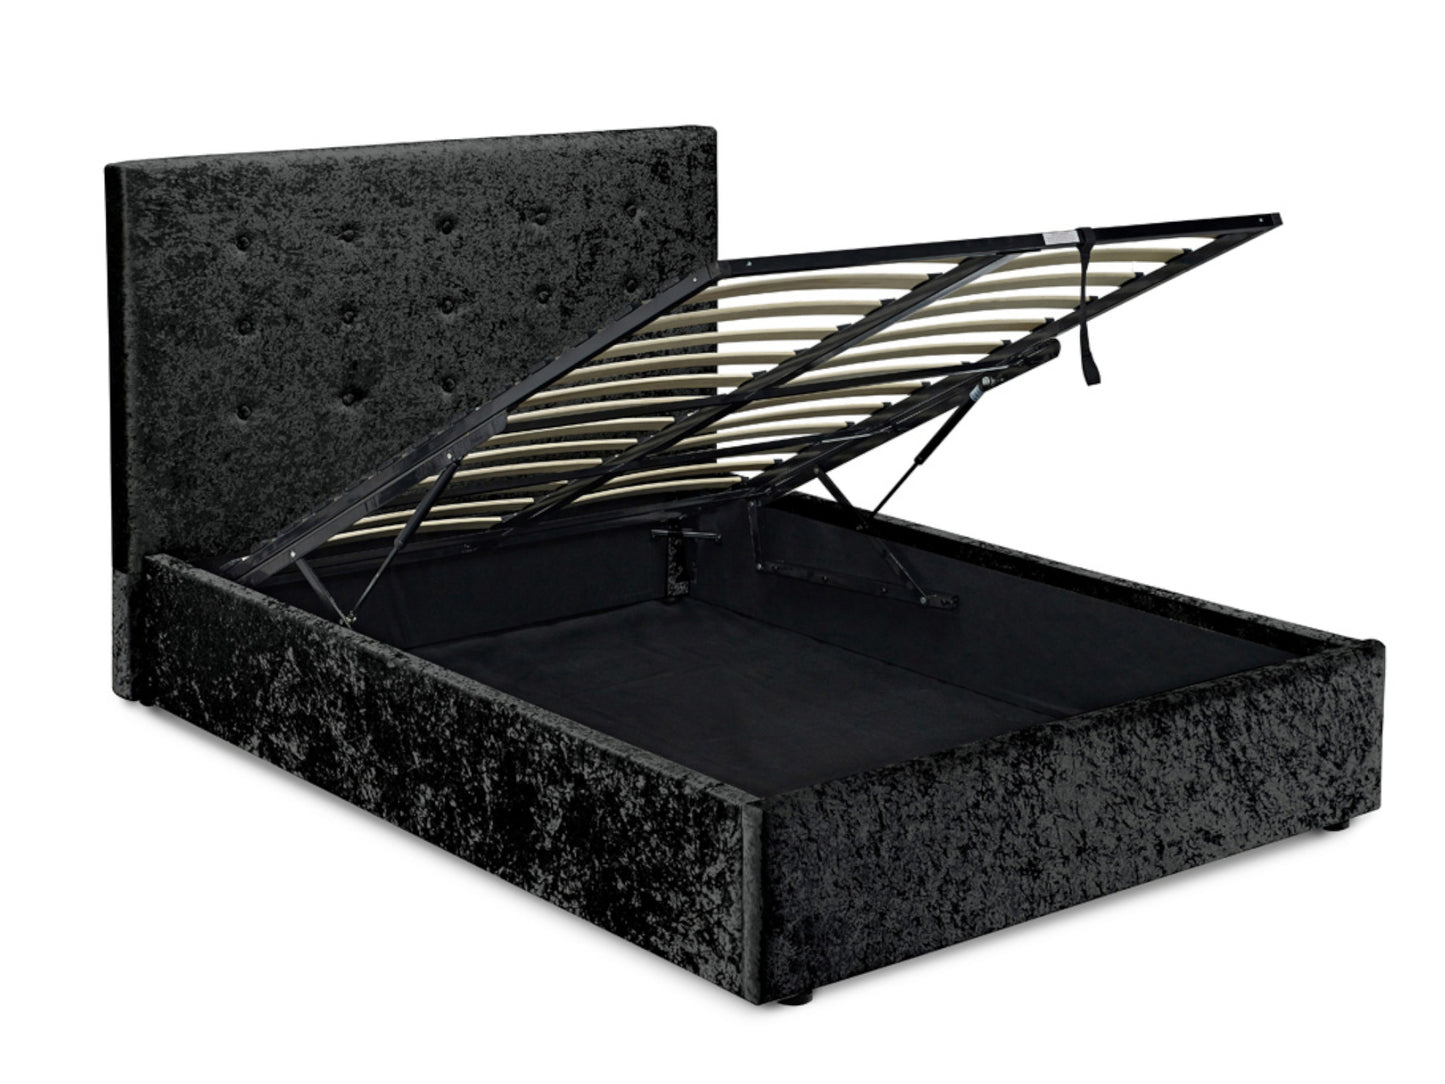 Rimini Ottoman Storage Bed Frame in Crushed Black